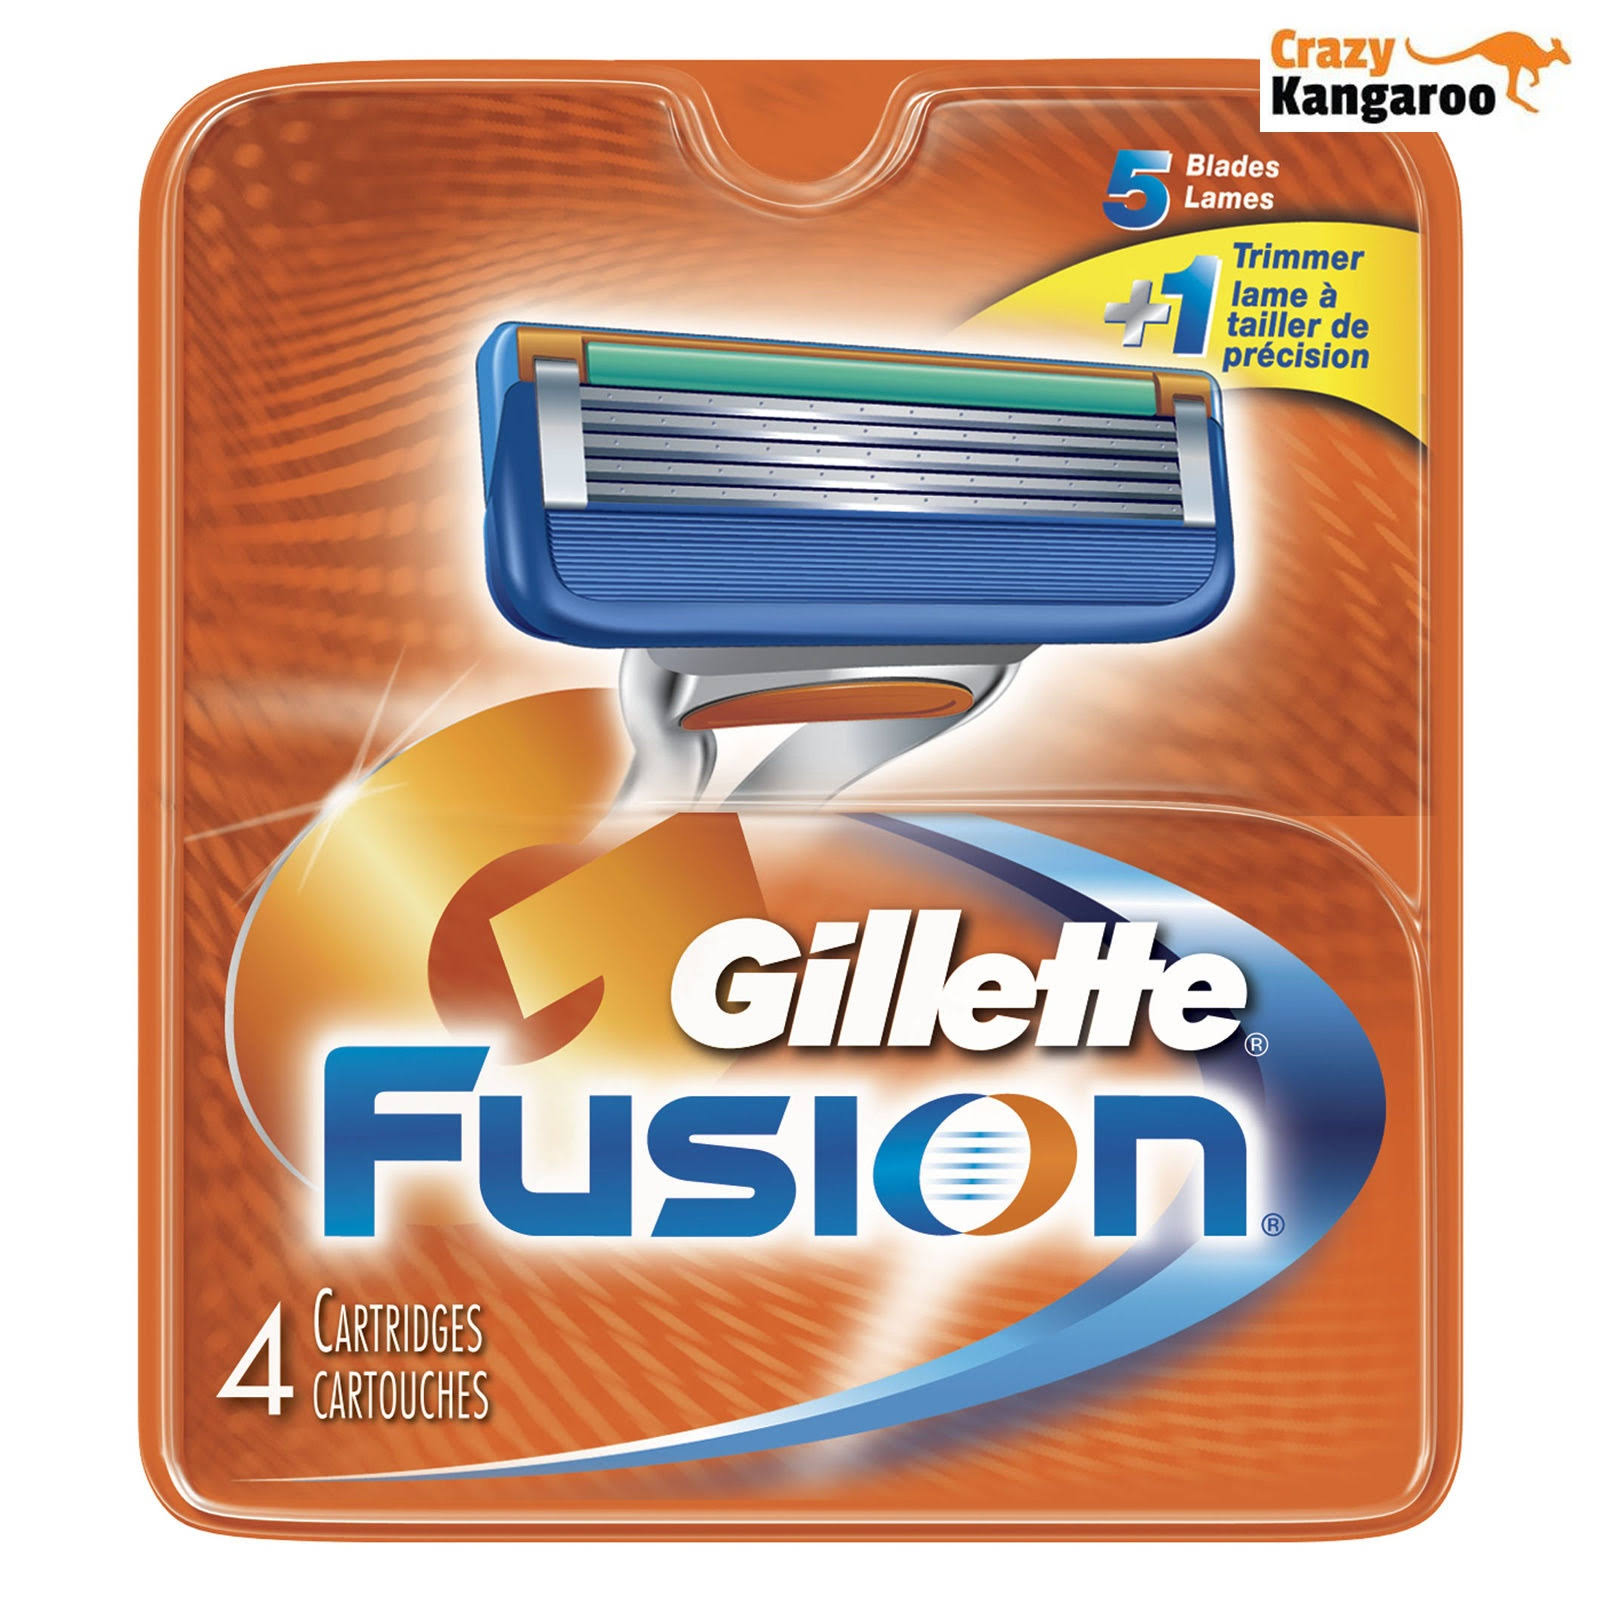 Gillette Fusion Razor Blades - 4 Blades